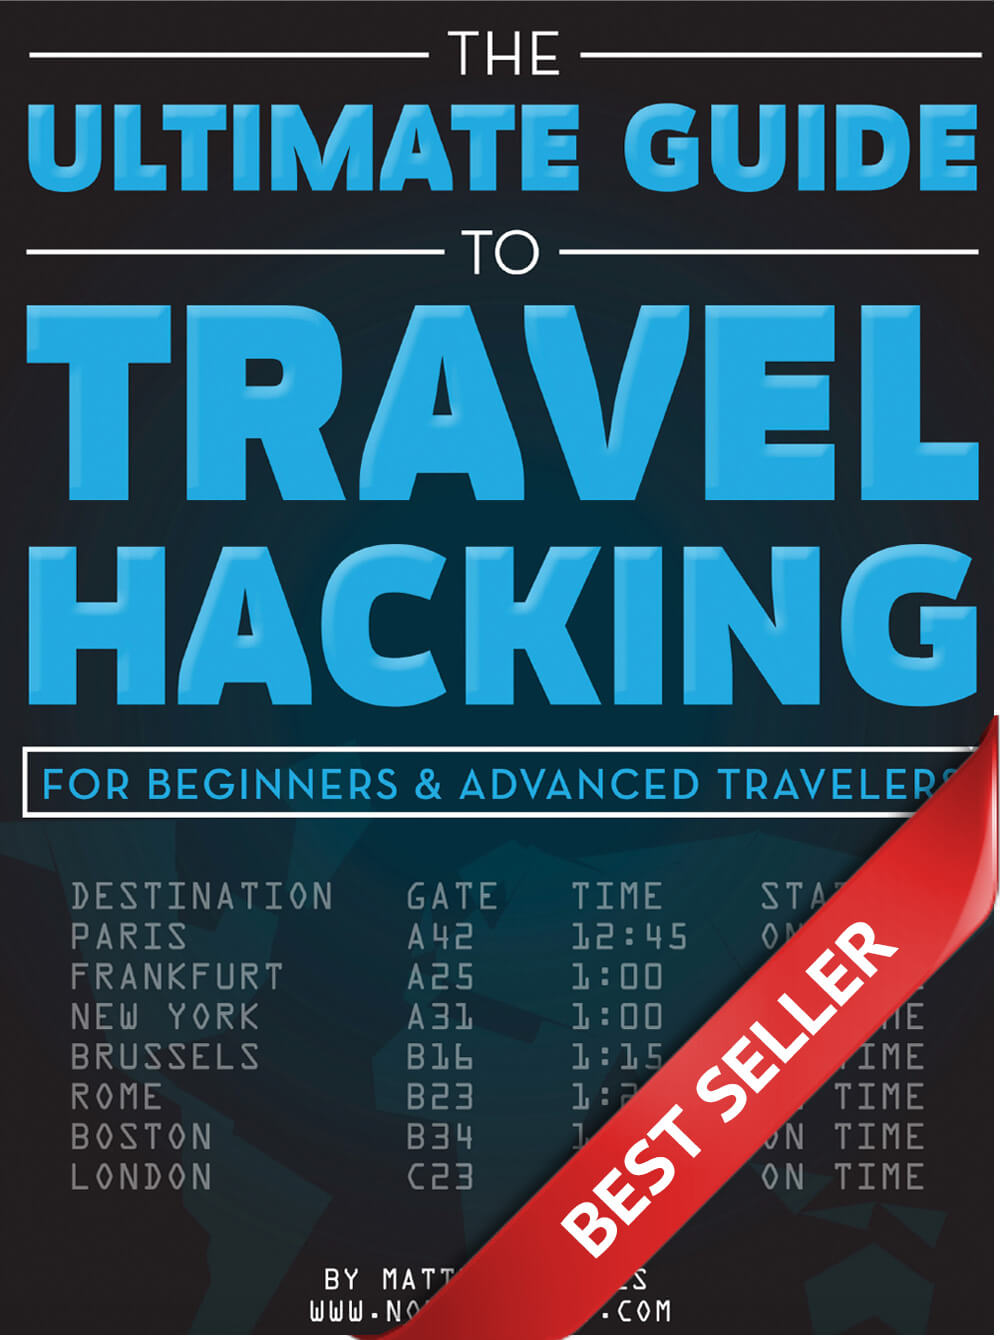 Learn Expert Travel Hacking Secrets